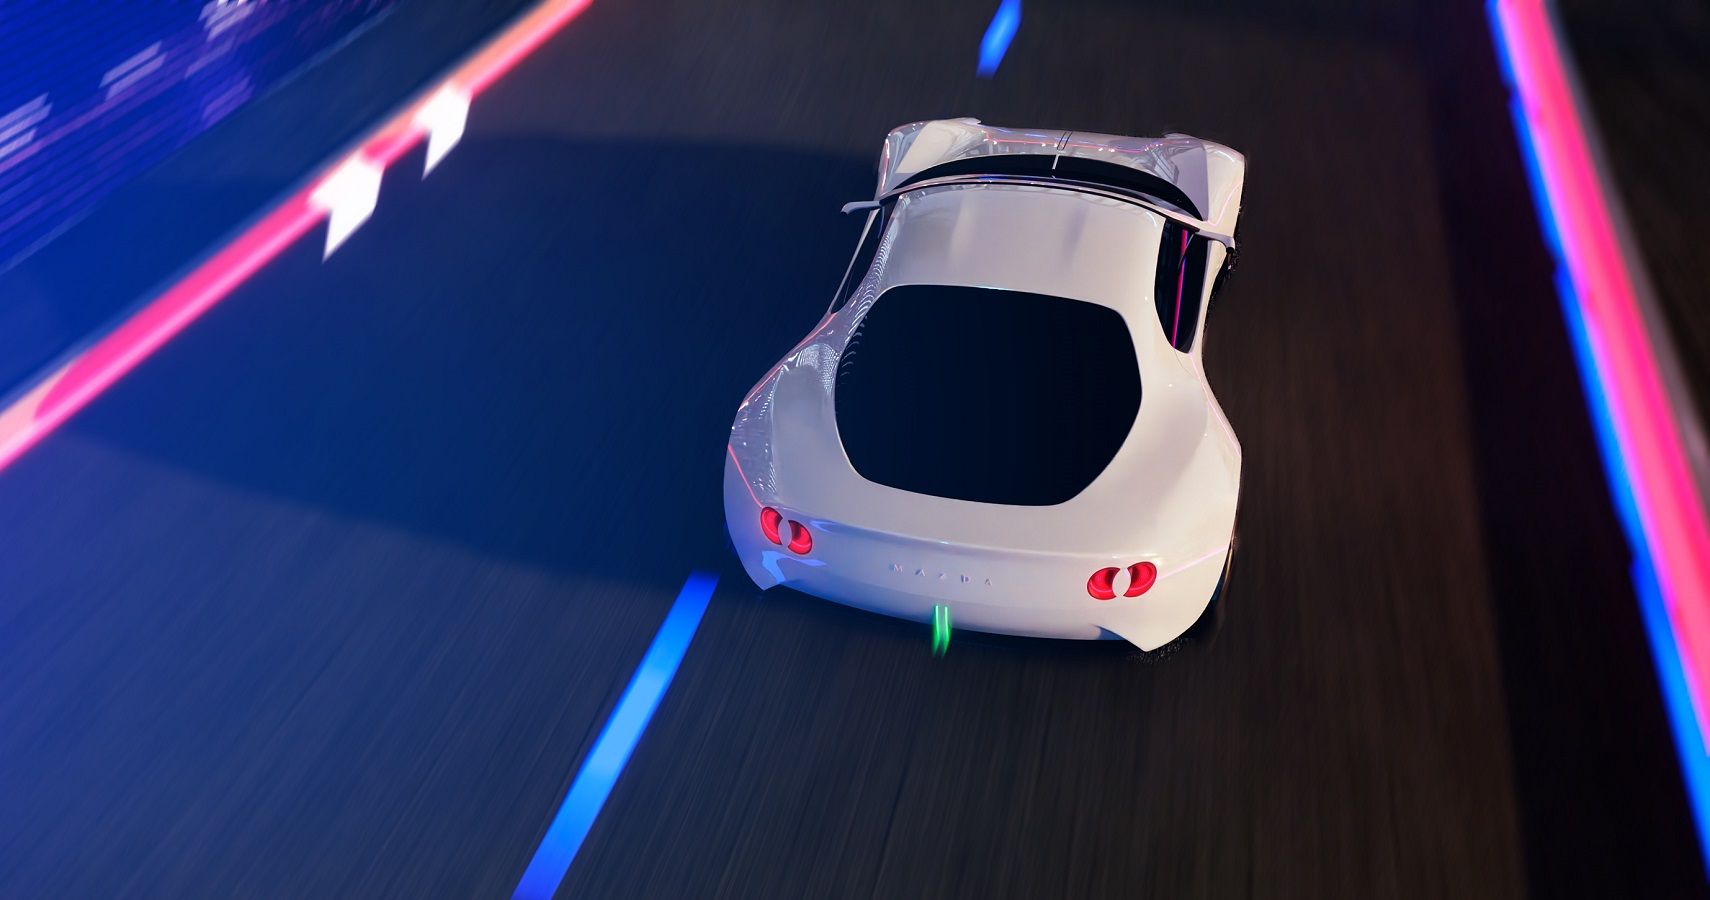 Mazda Vision Study Model Concept Image